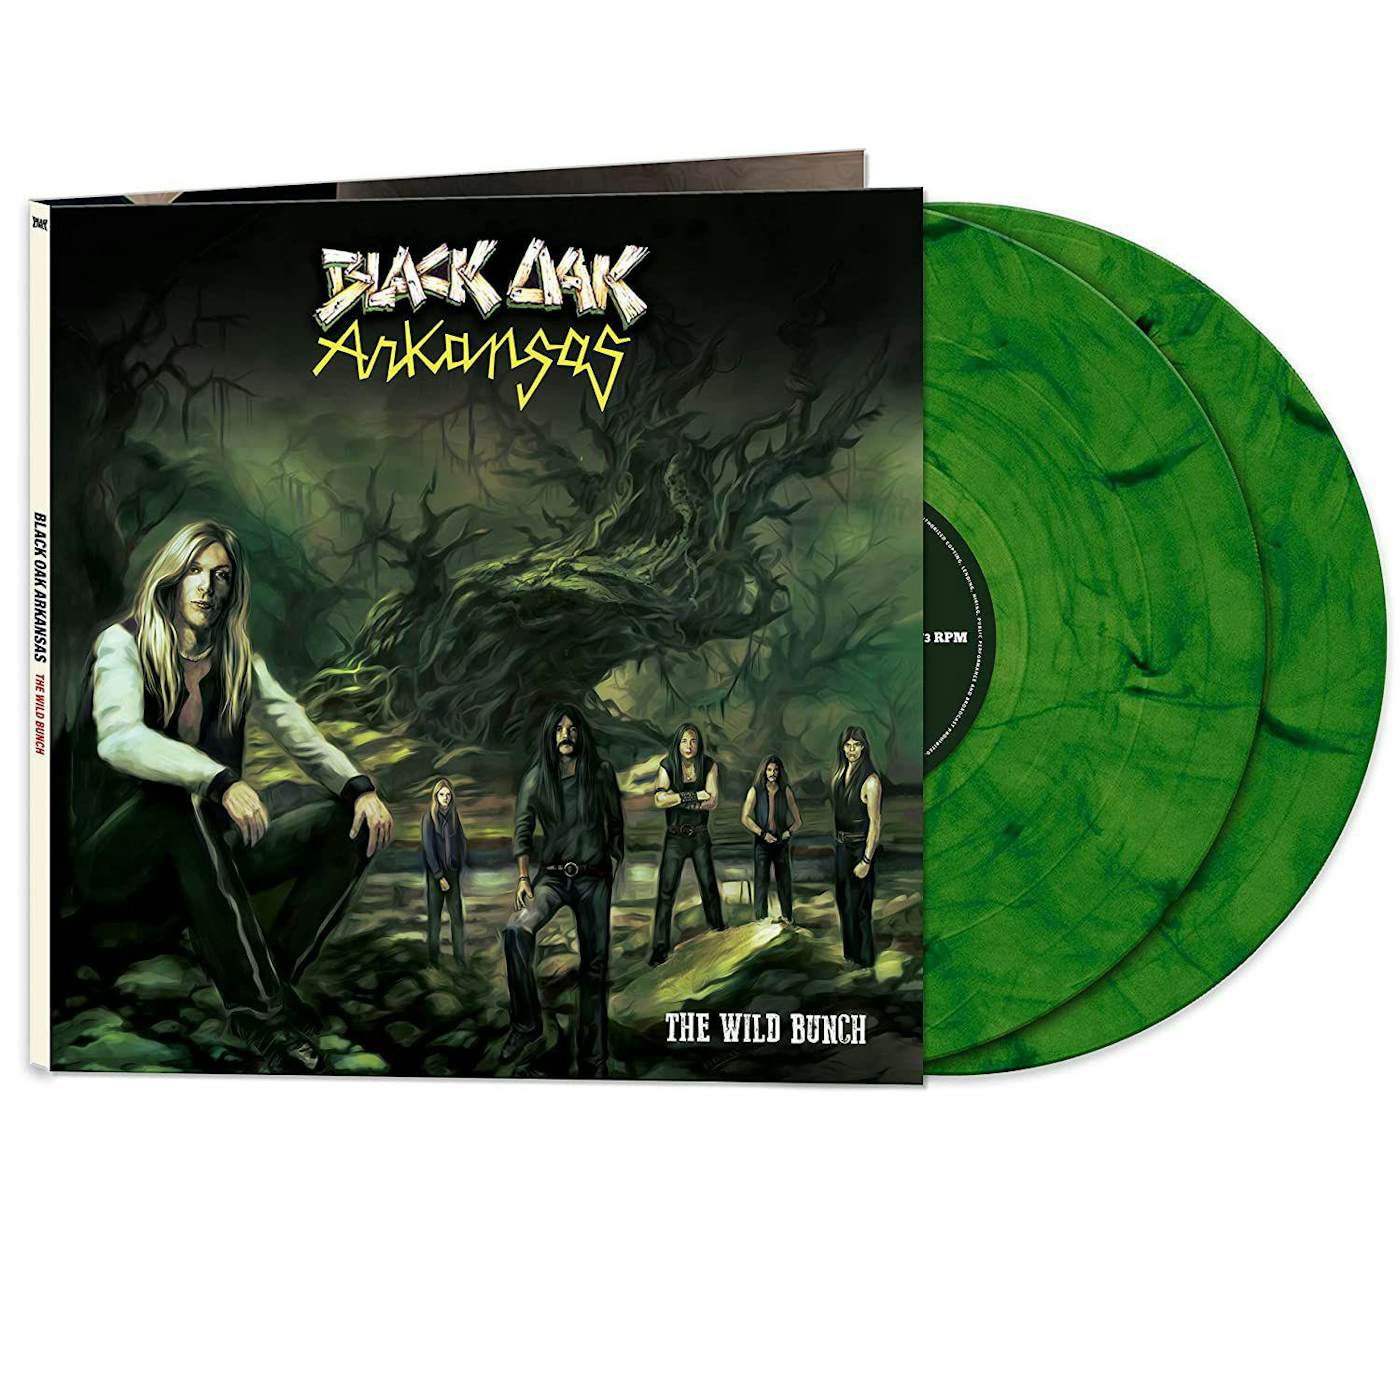 Black Oak Arkansas Wild Bunch (Green Marble) Vinyl Record